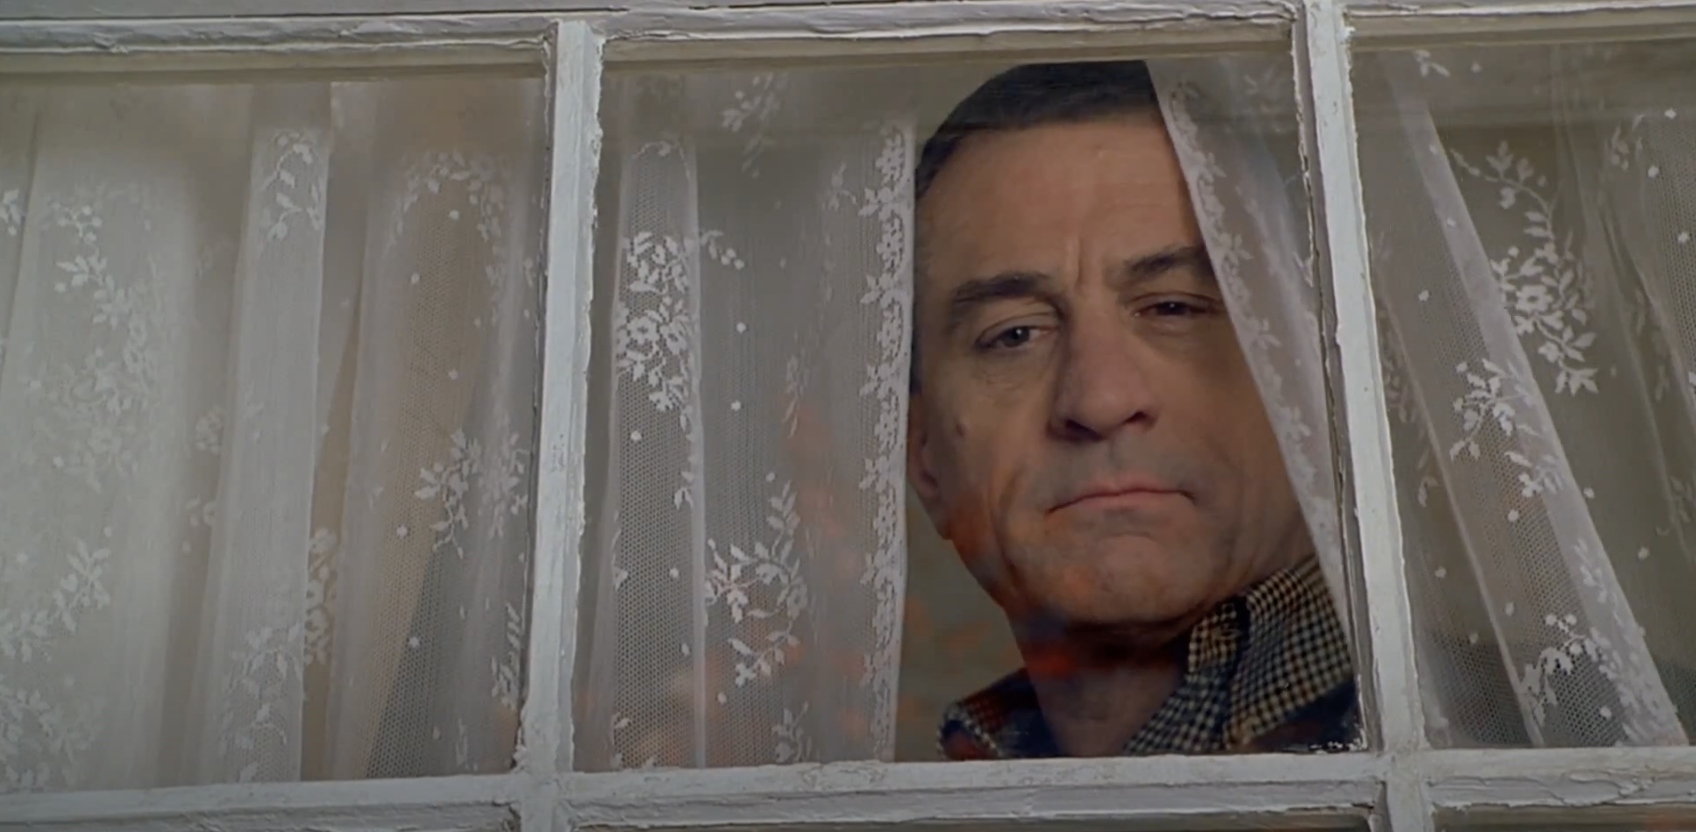 Robert De Niro peers out a window